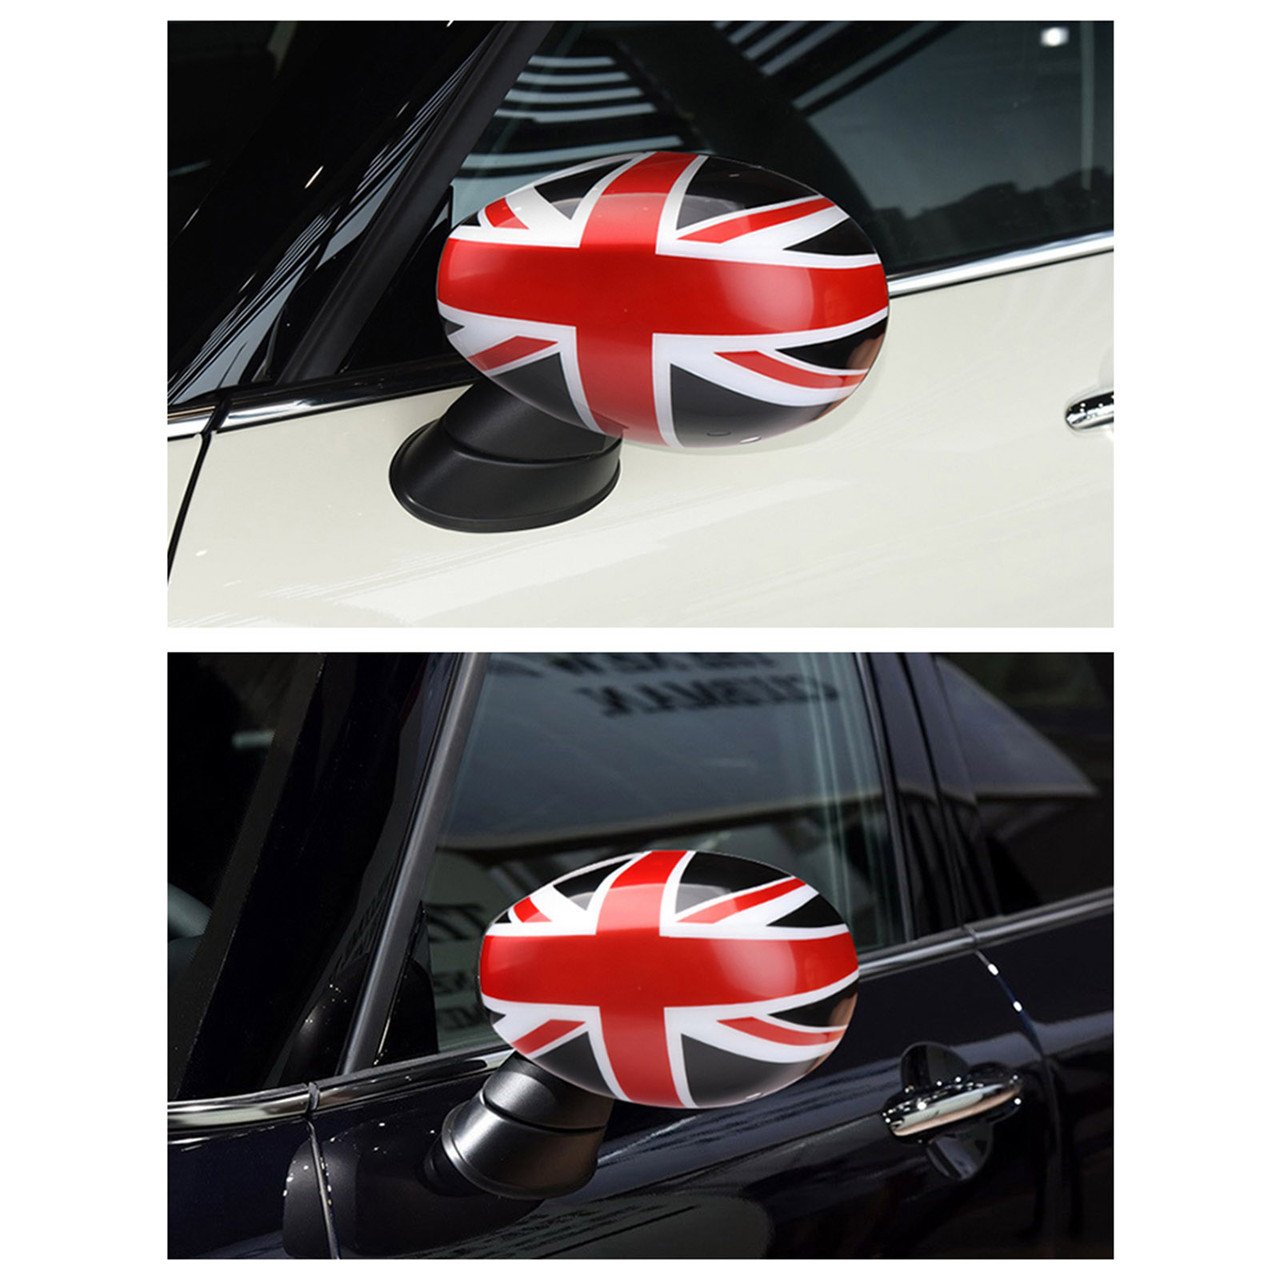 Union Jack UK Flag Mirror Covers for MINI Cooper F54 F55 F56 F57 F60 Black/Red